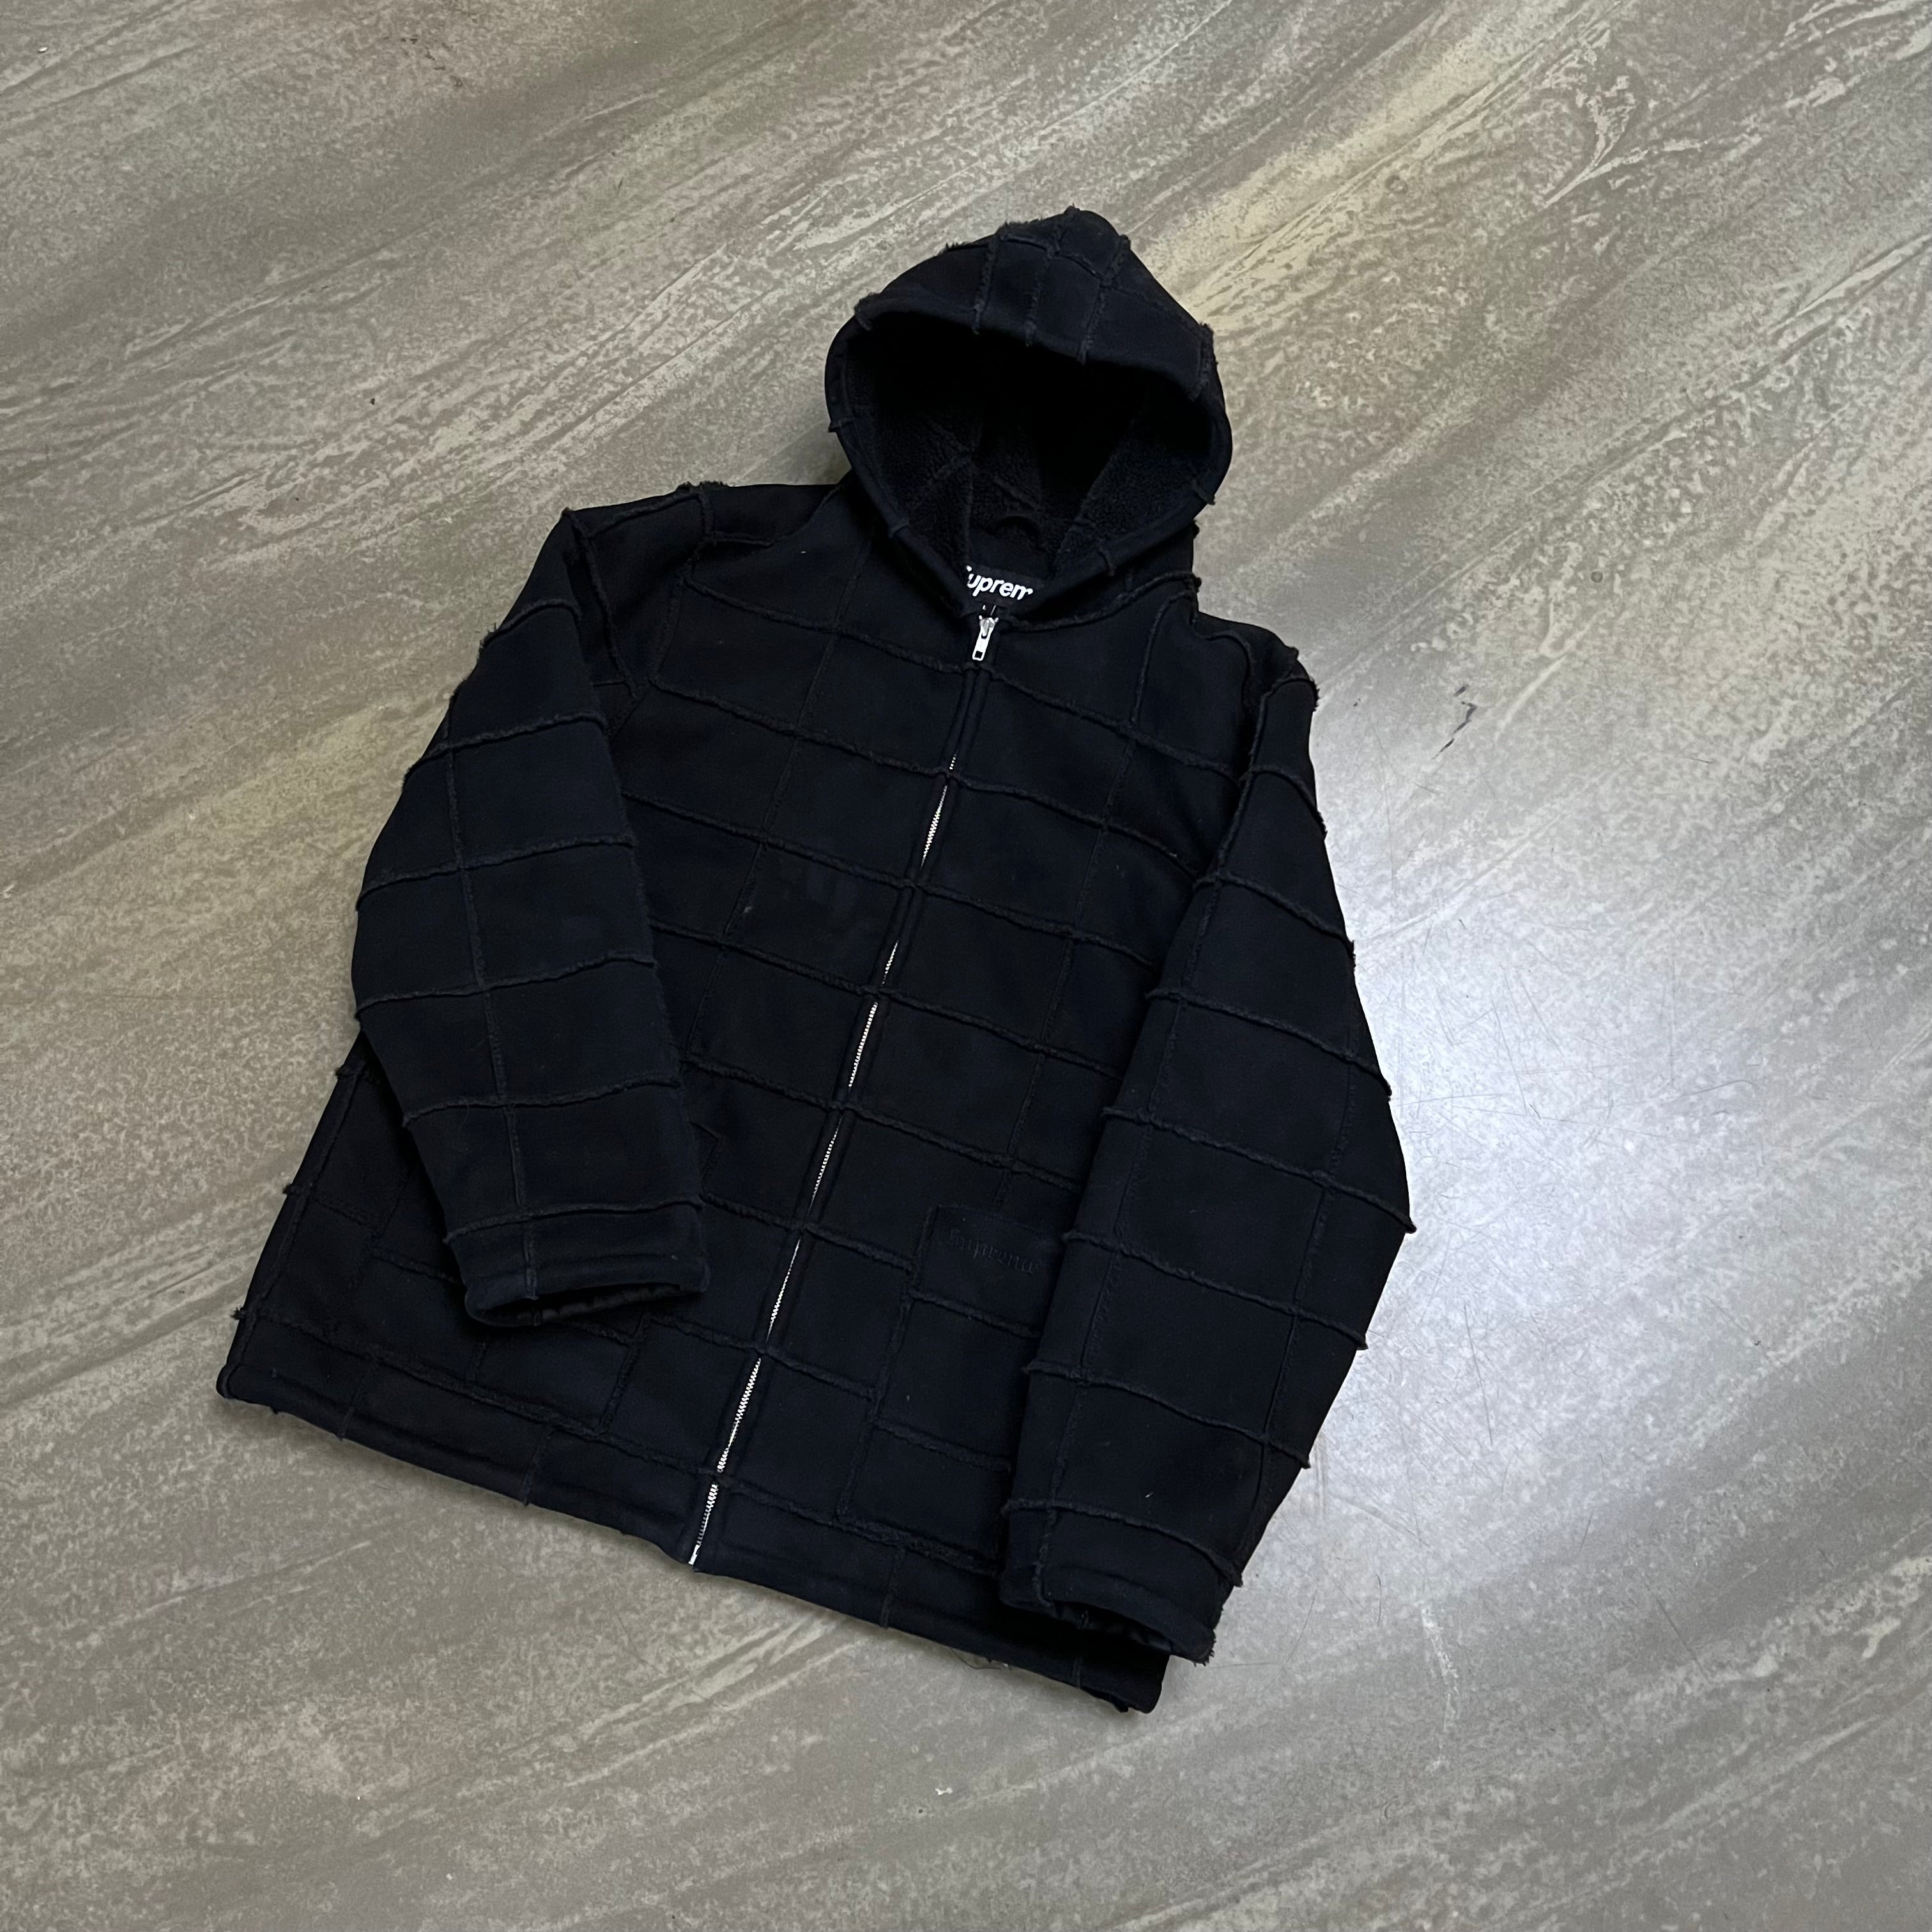 Supreme leather jacket (Size L)